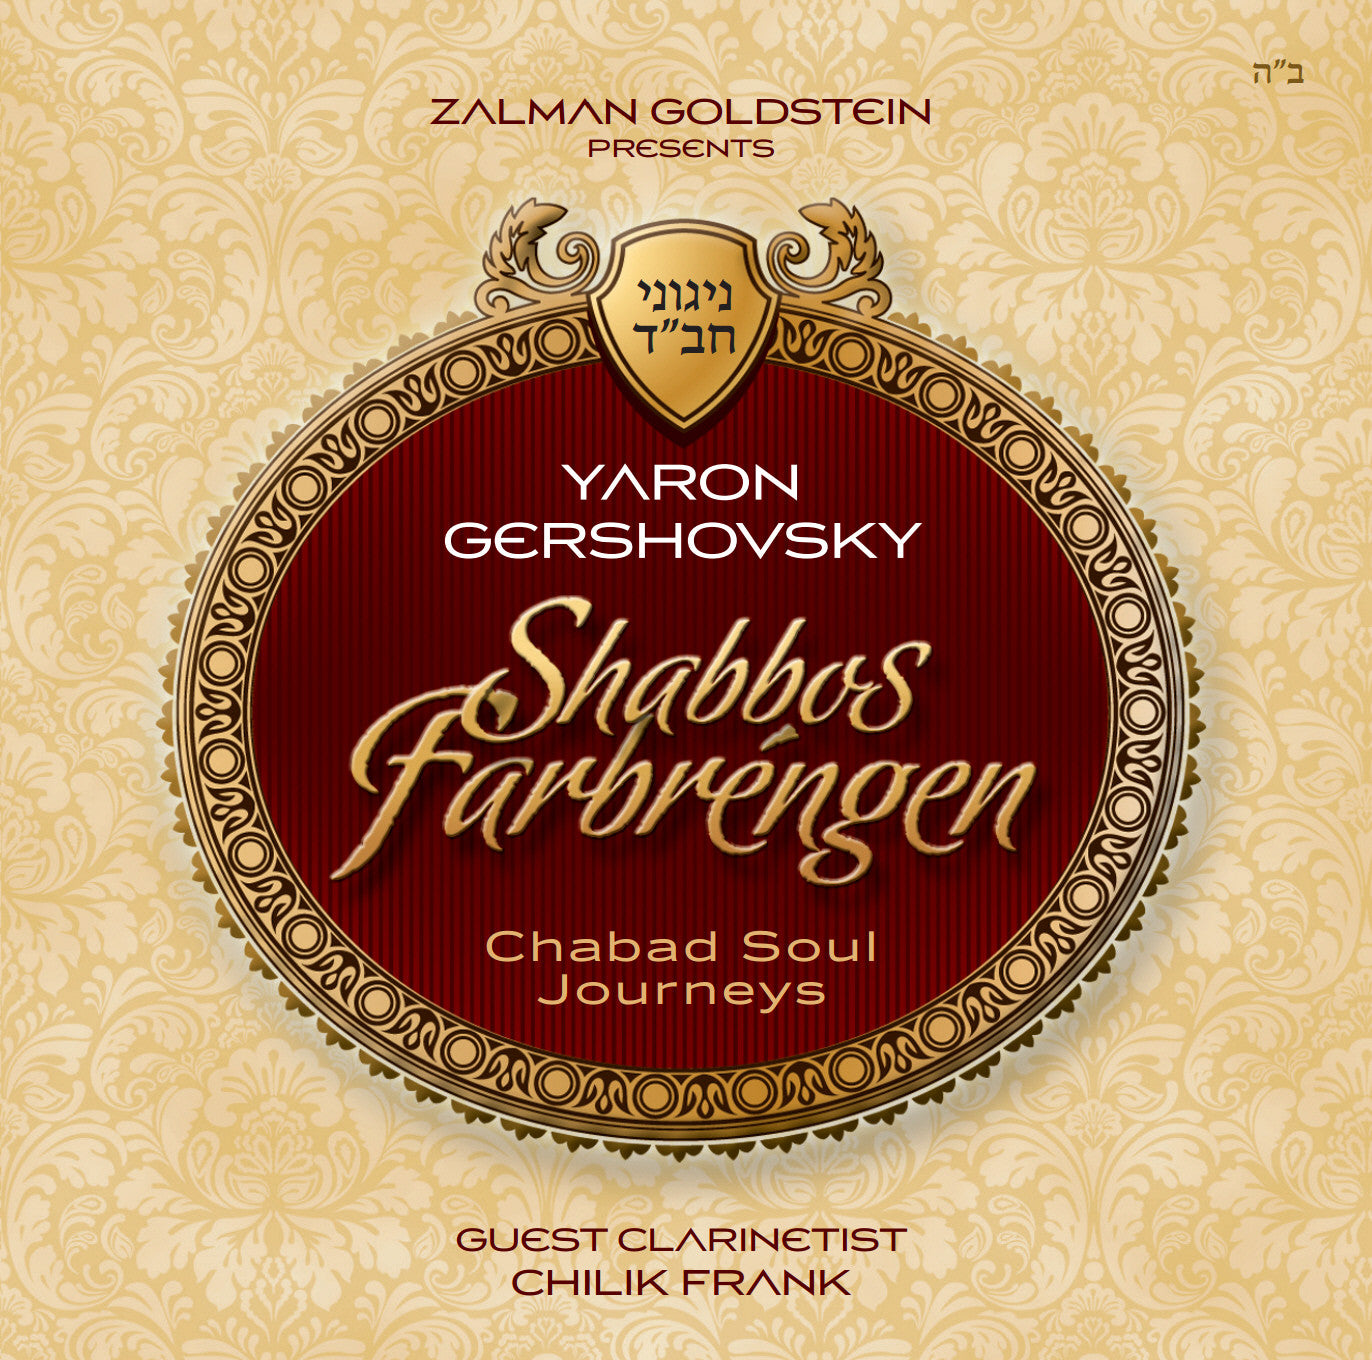 Zalman Goldstein - Shabbos Farbrengen